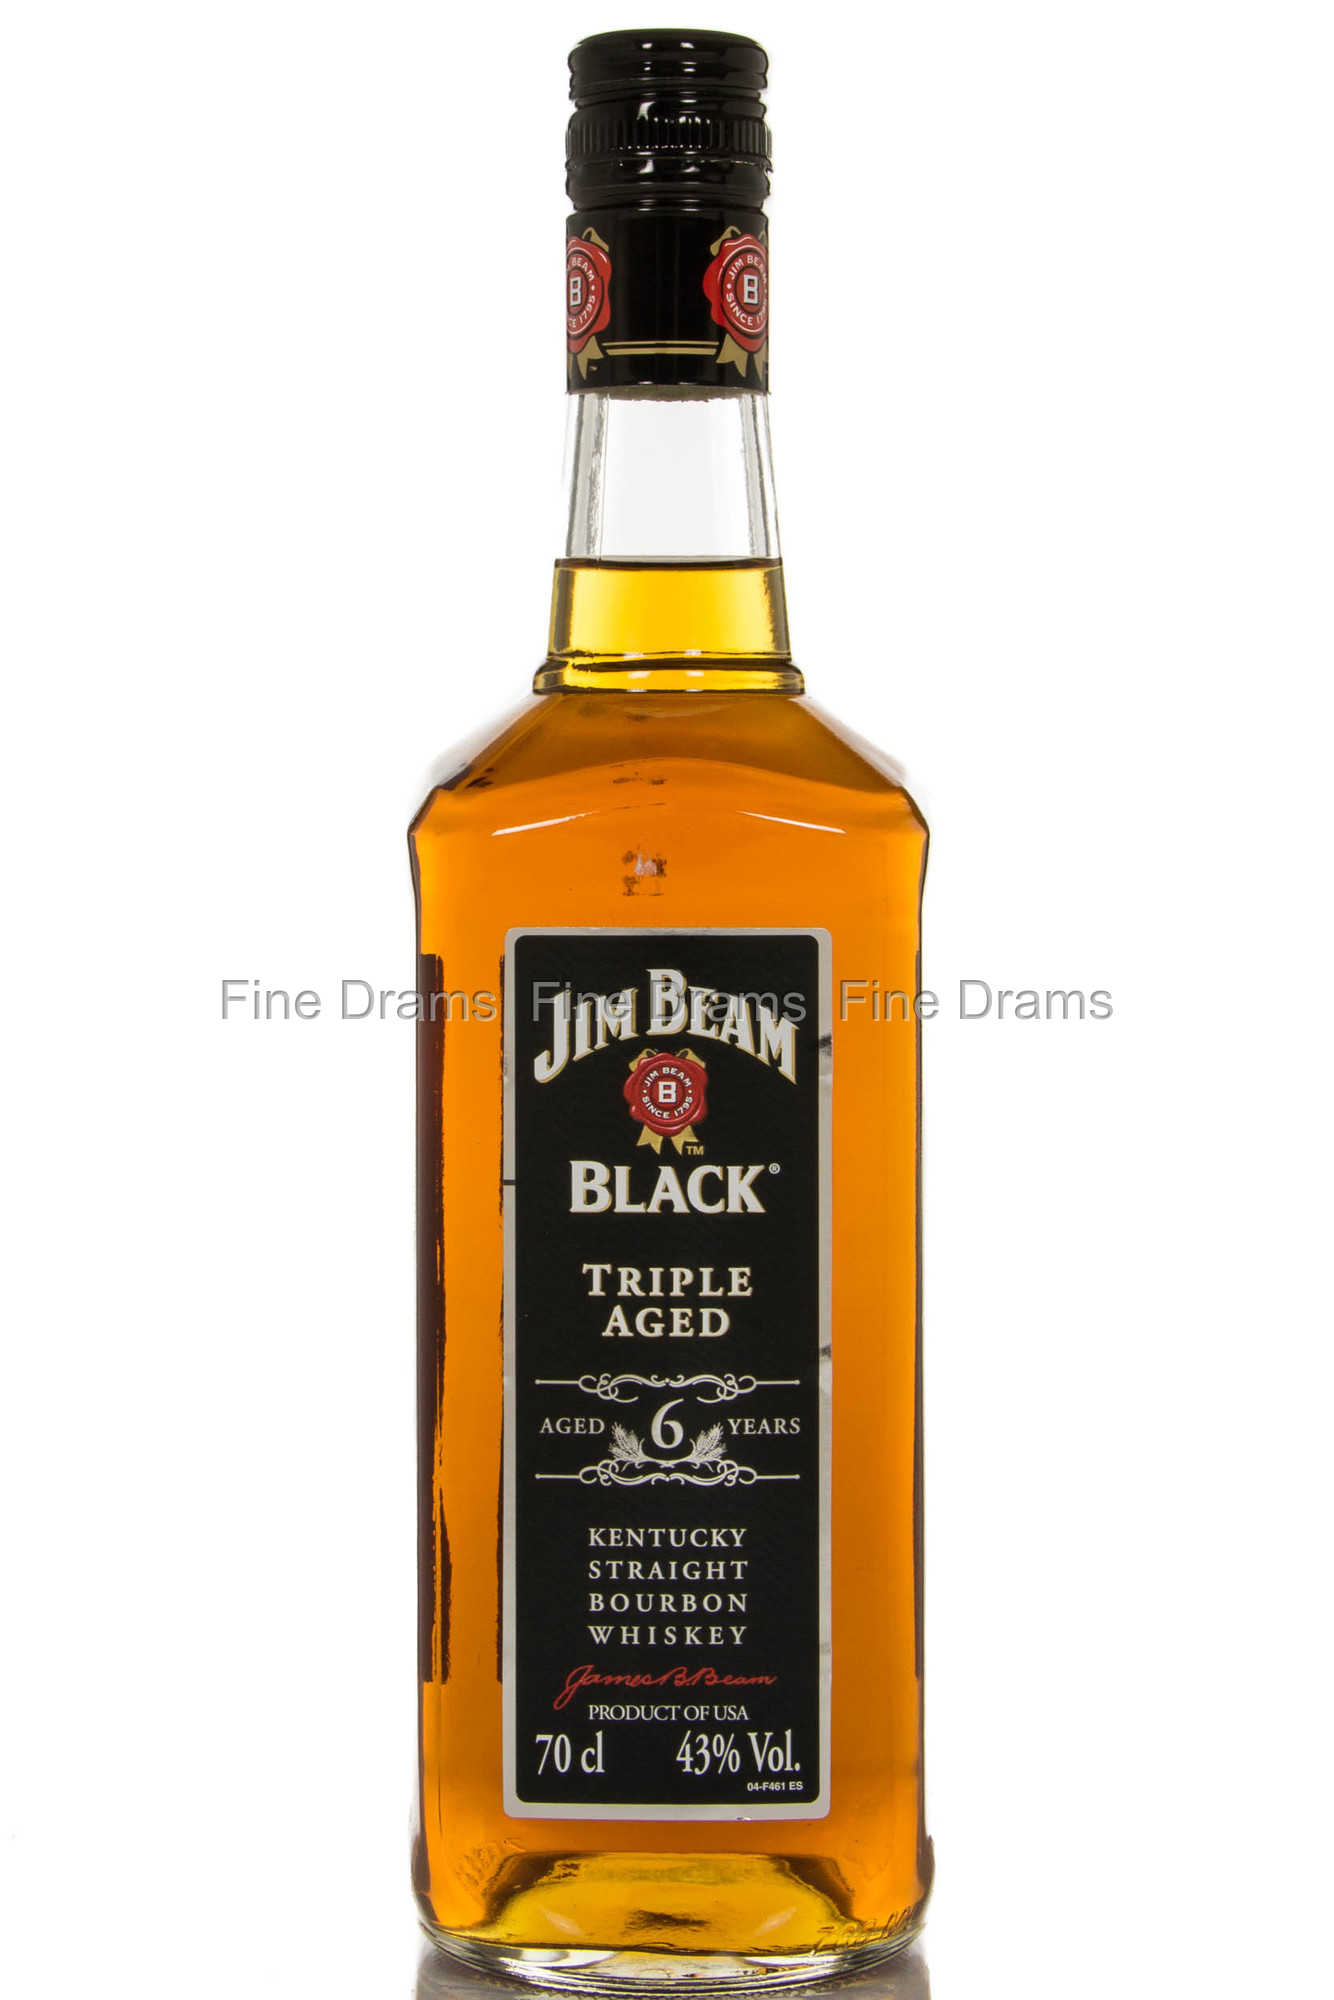 Jim Beam Black 6 Old Bourbon Whiskey Year